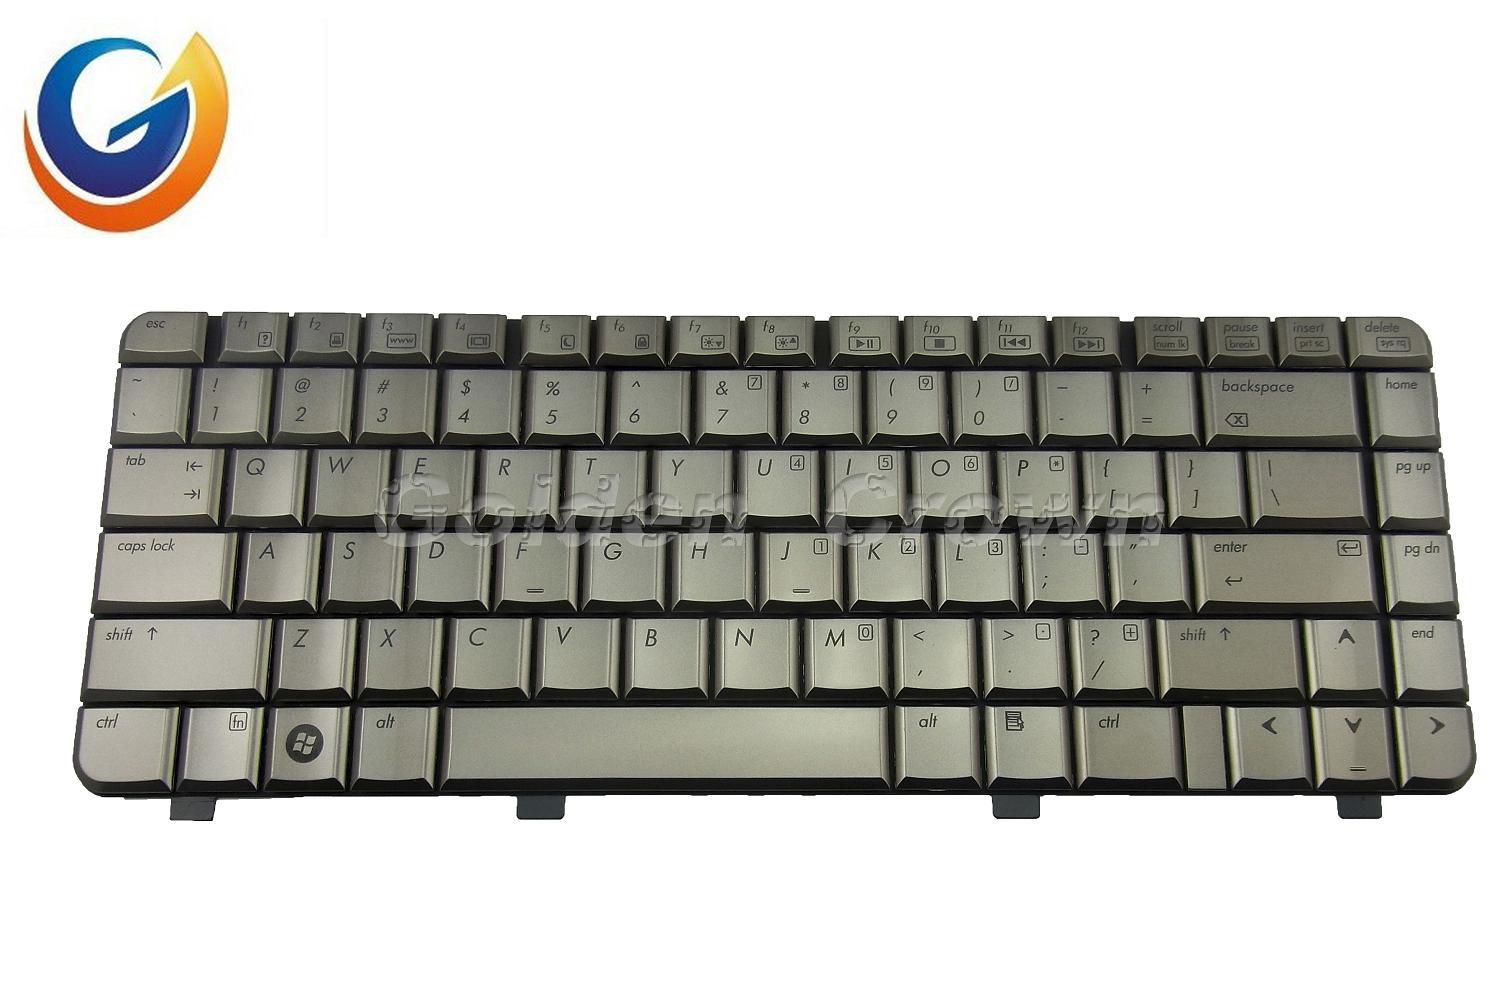 Laptop Keyboard for HP Pavlion DV4t DV4 DV4-1000 MP-05583US US Bronze